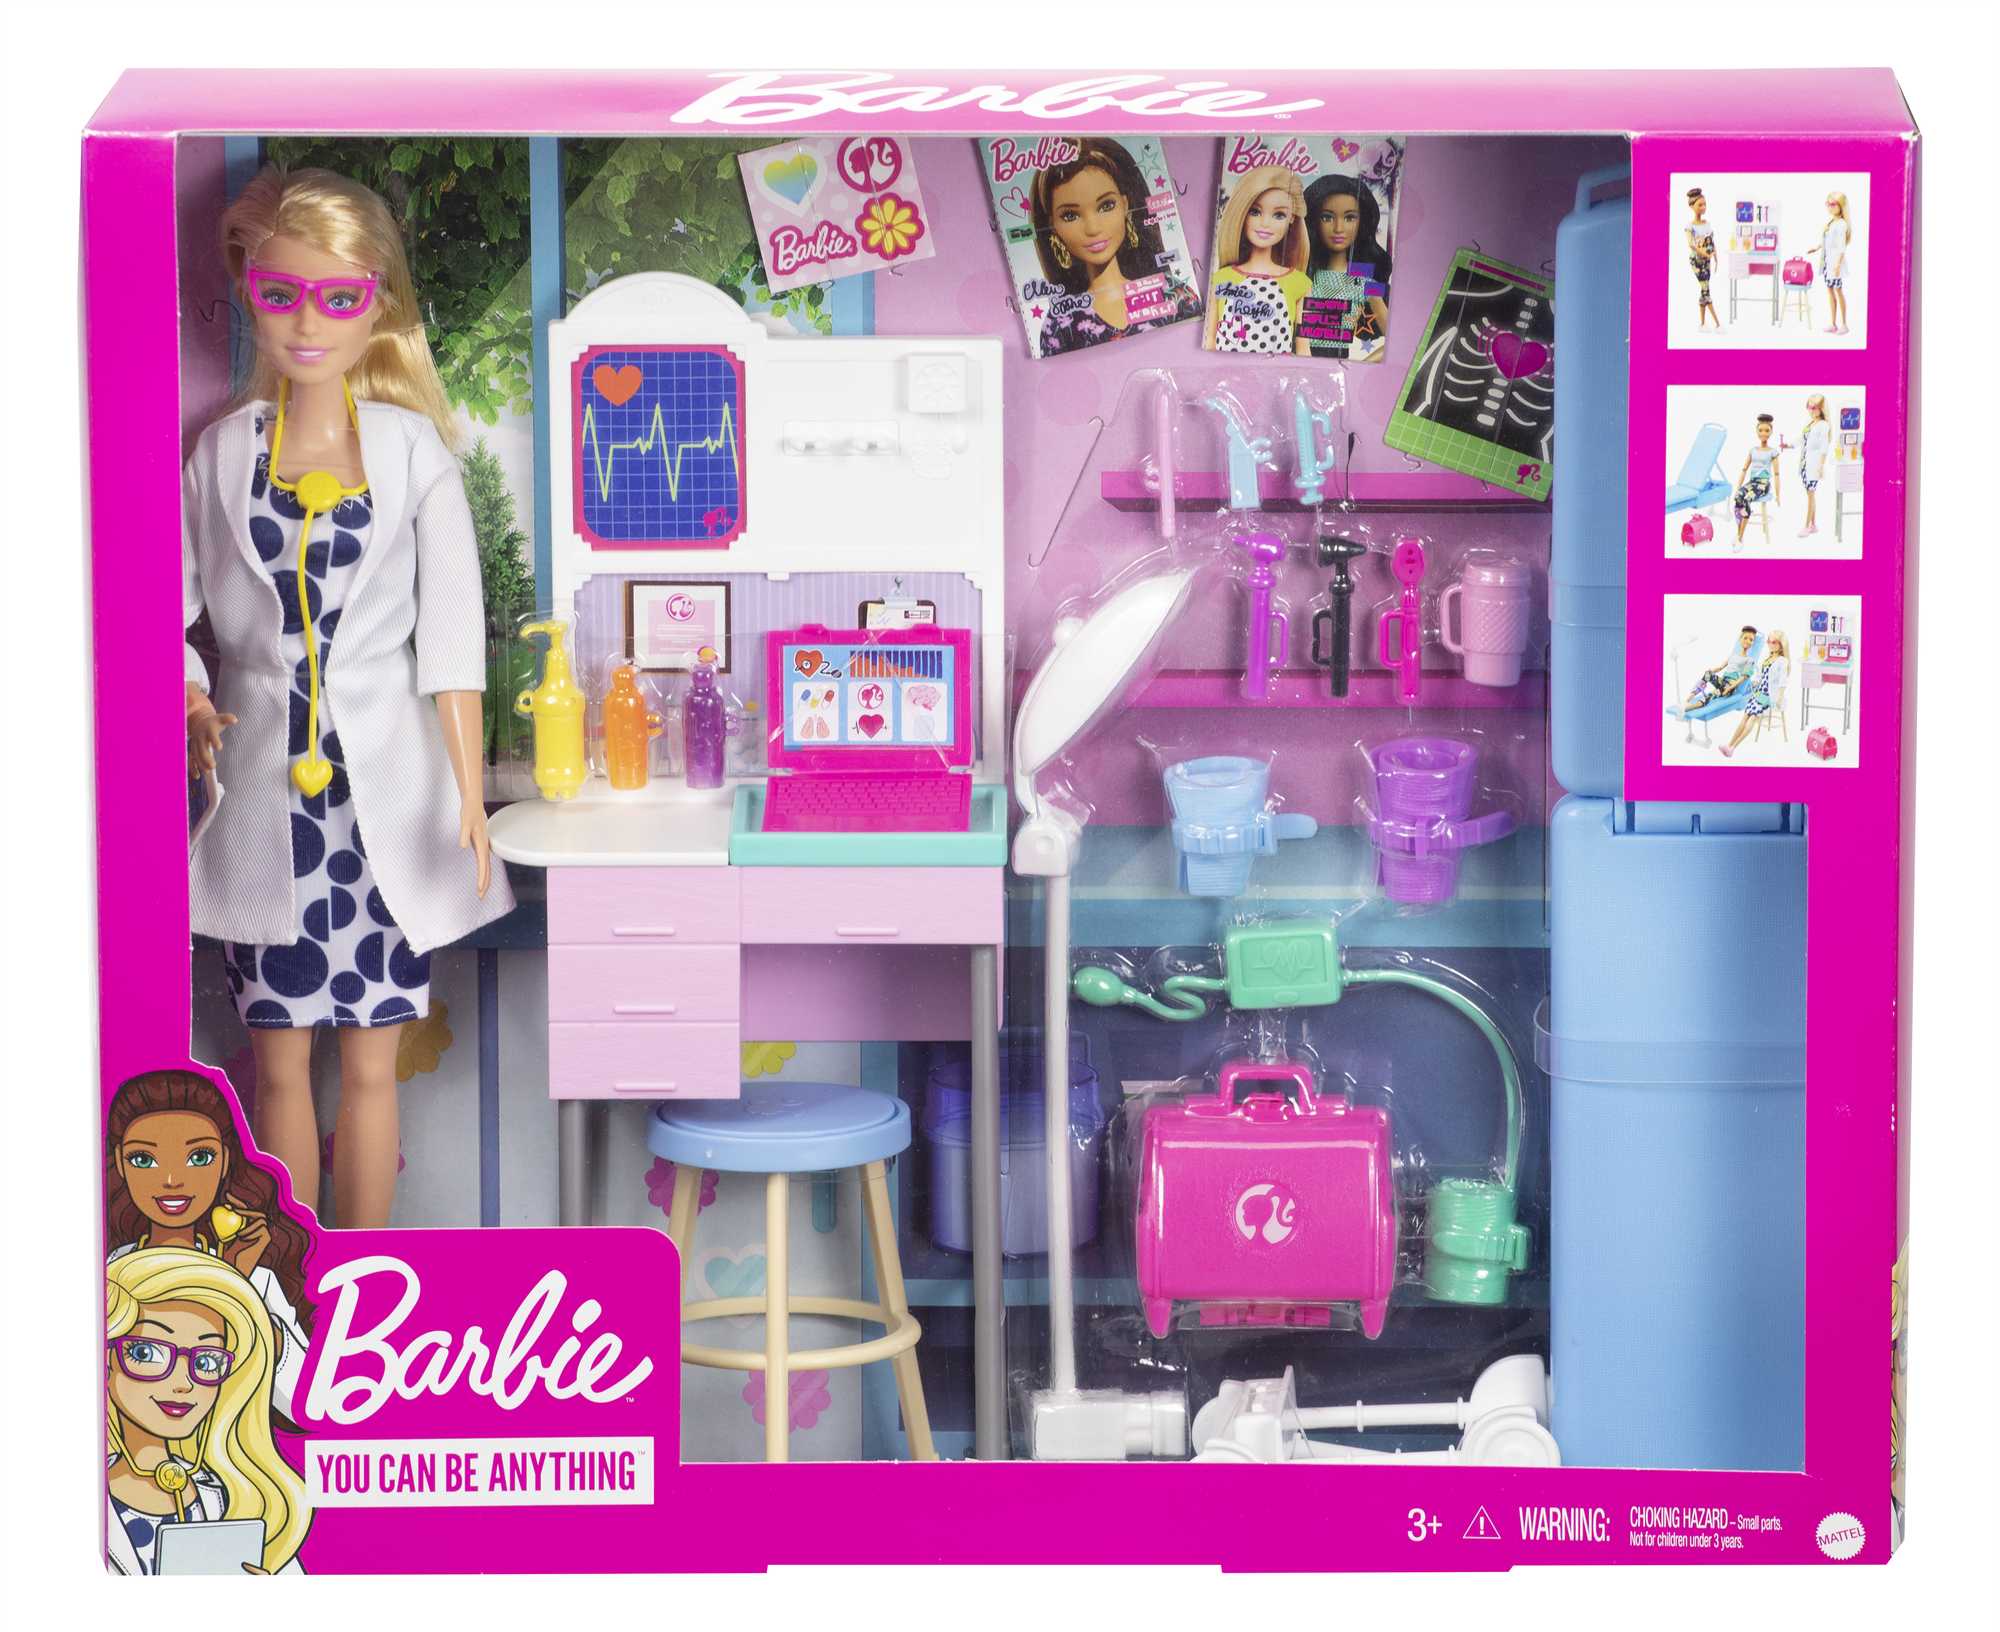 Barbie Dottoressa pediatra - Barbie I Can Be! Playset (BDT49) - Barbie -  Mattel - Giocattoli